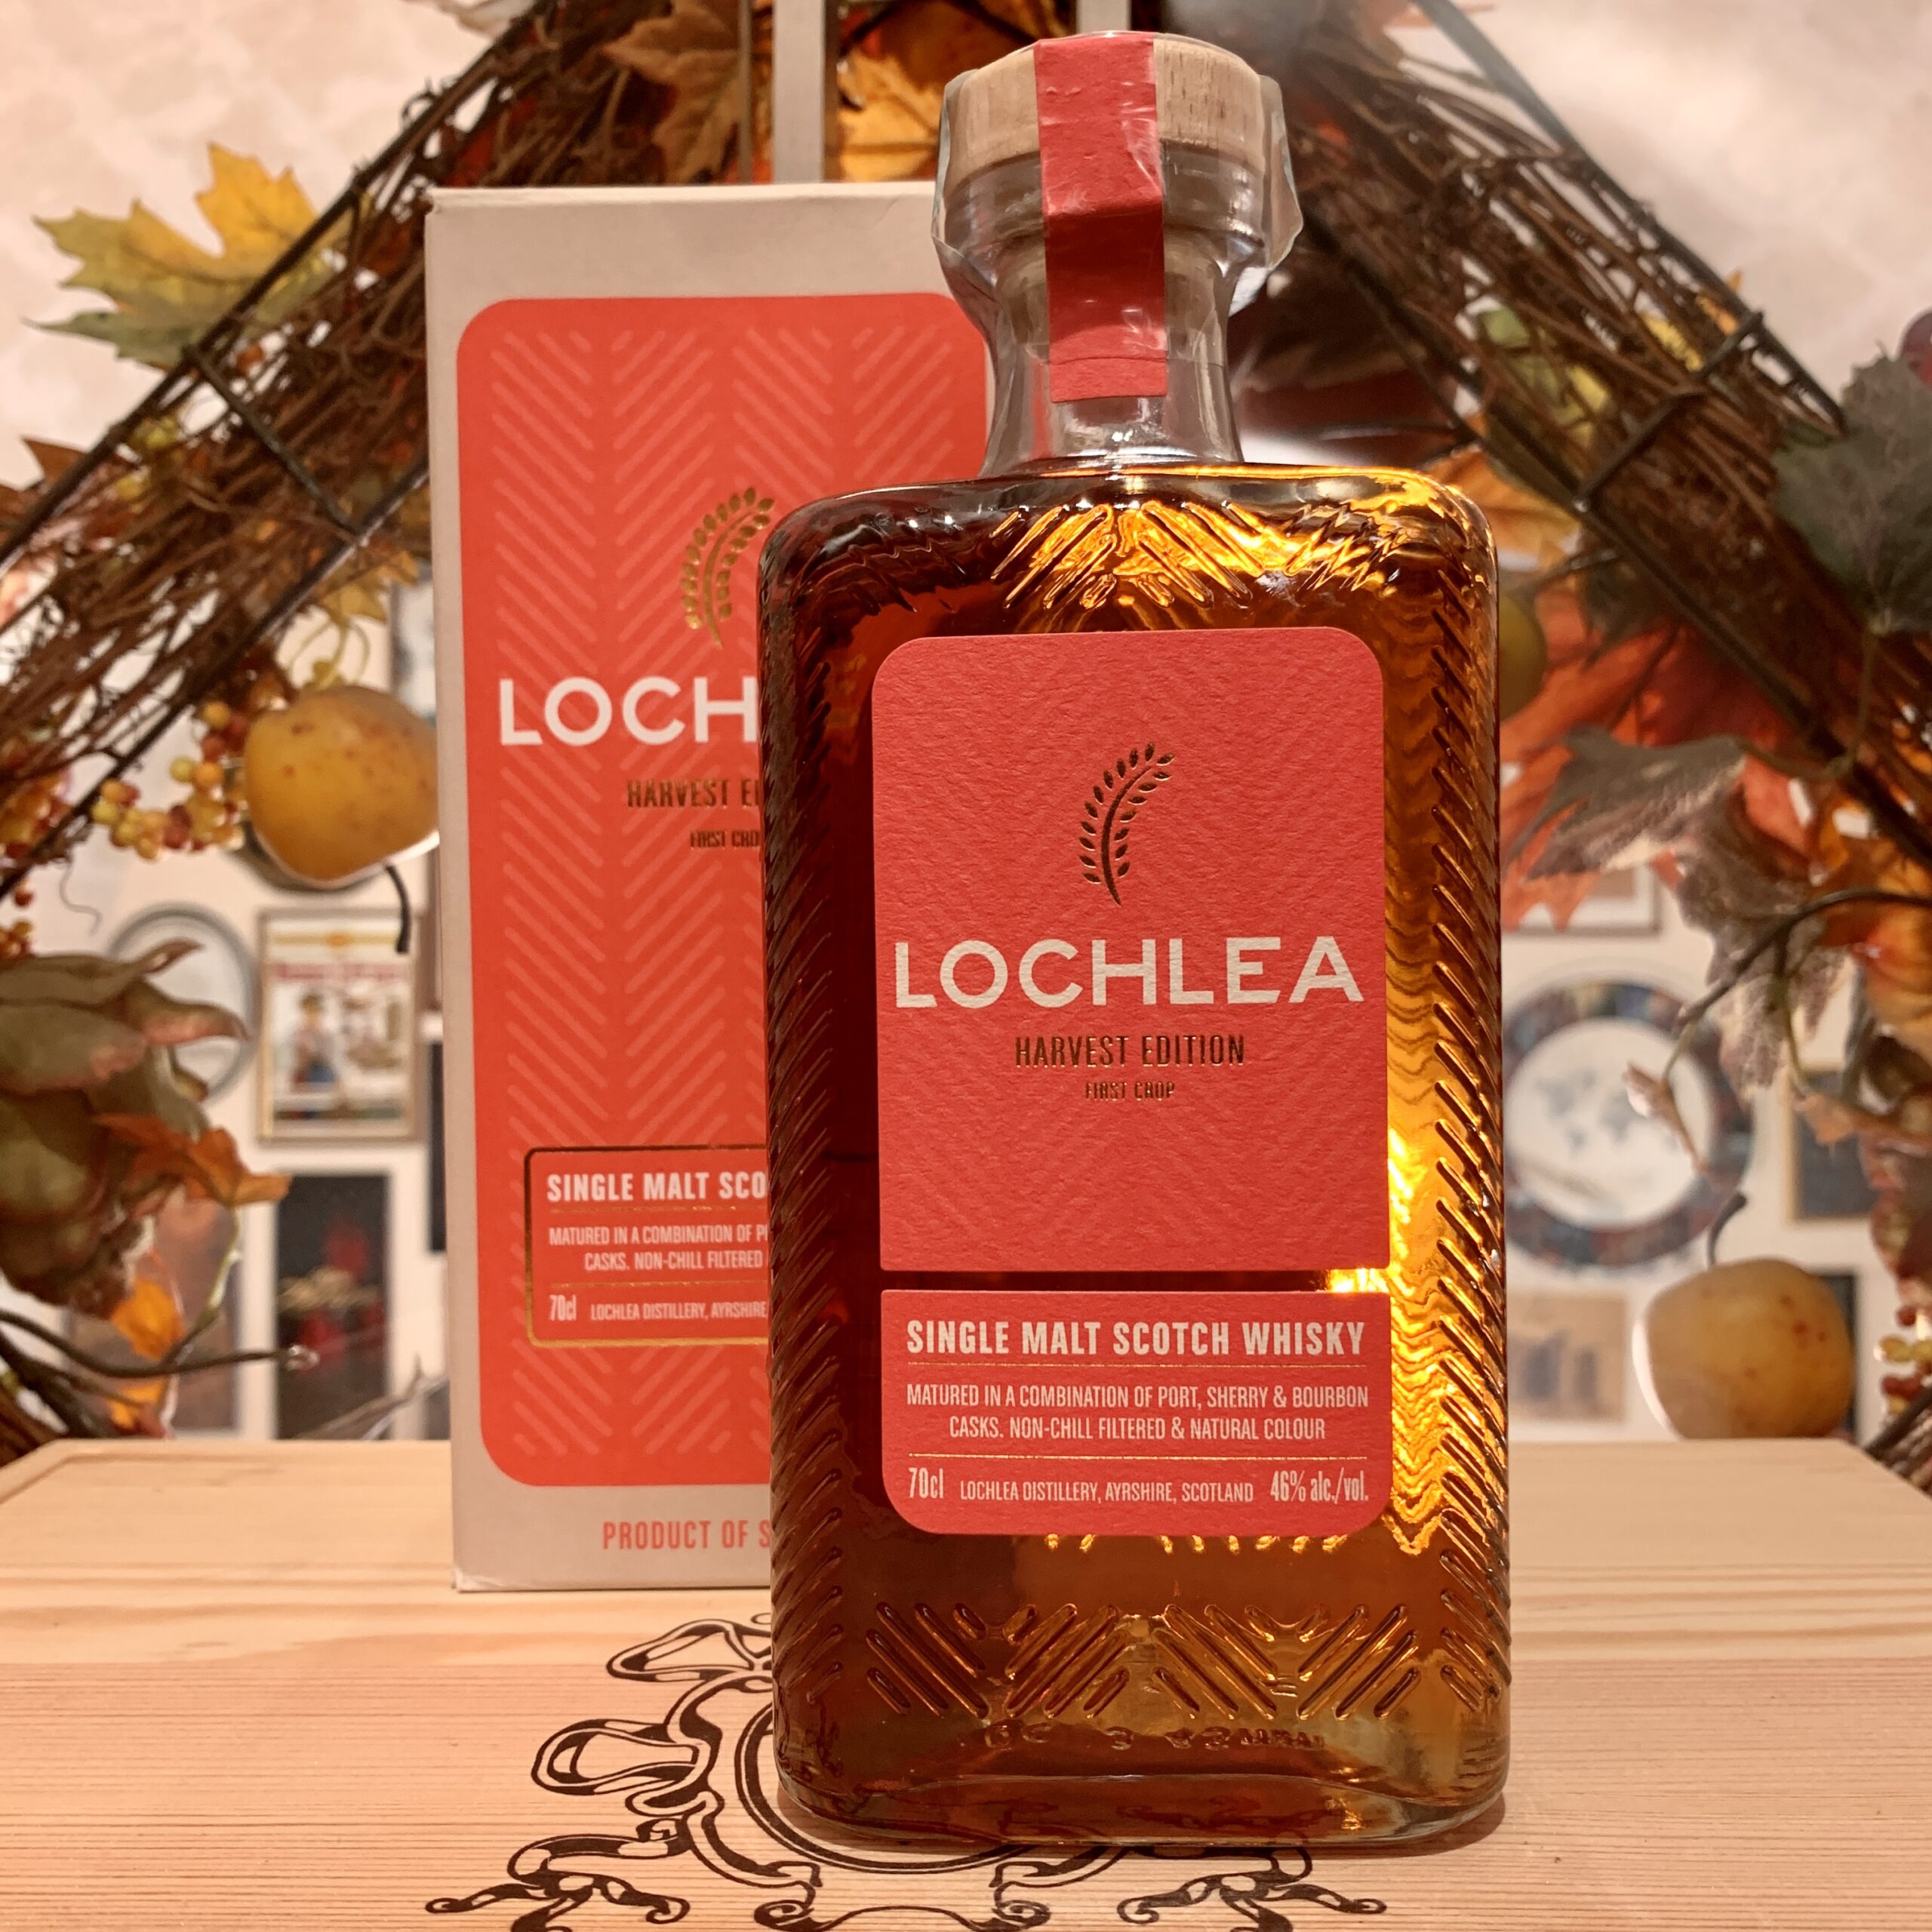 Lochlea “Harvest Edition 1st Crop” Lowlands Single Malt Scotch Whisky